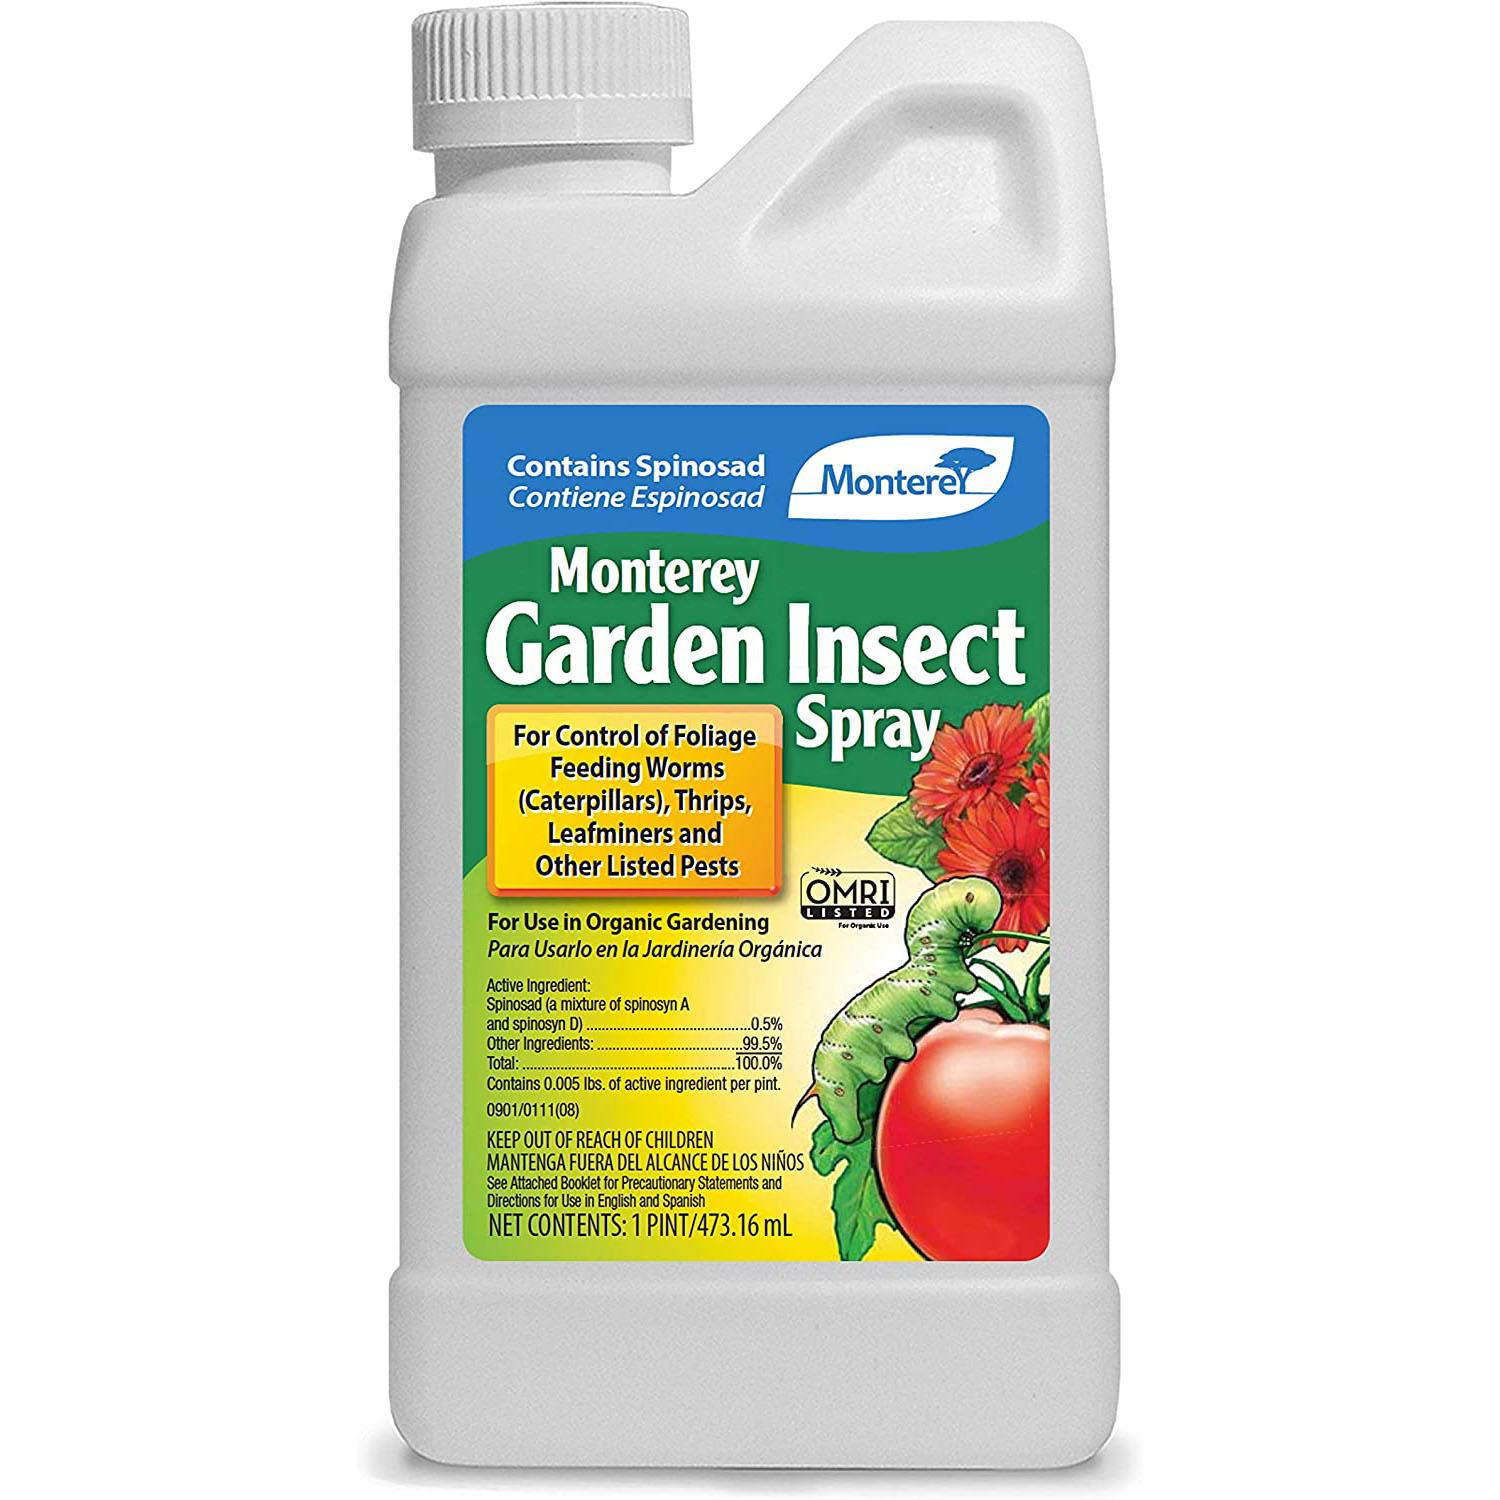 Monterey LG6150 Garden Insect Spray for $6.71